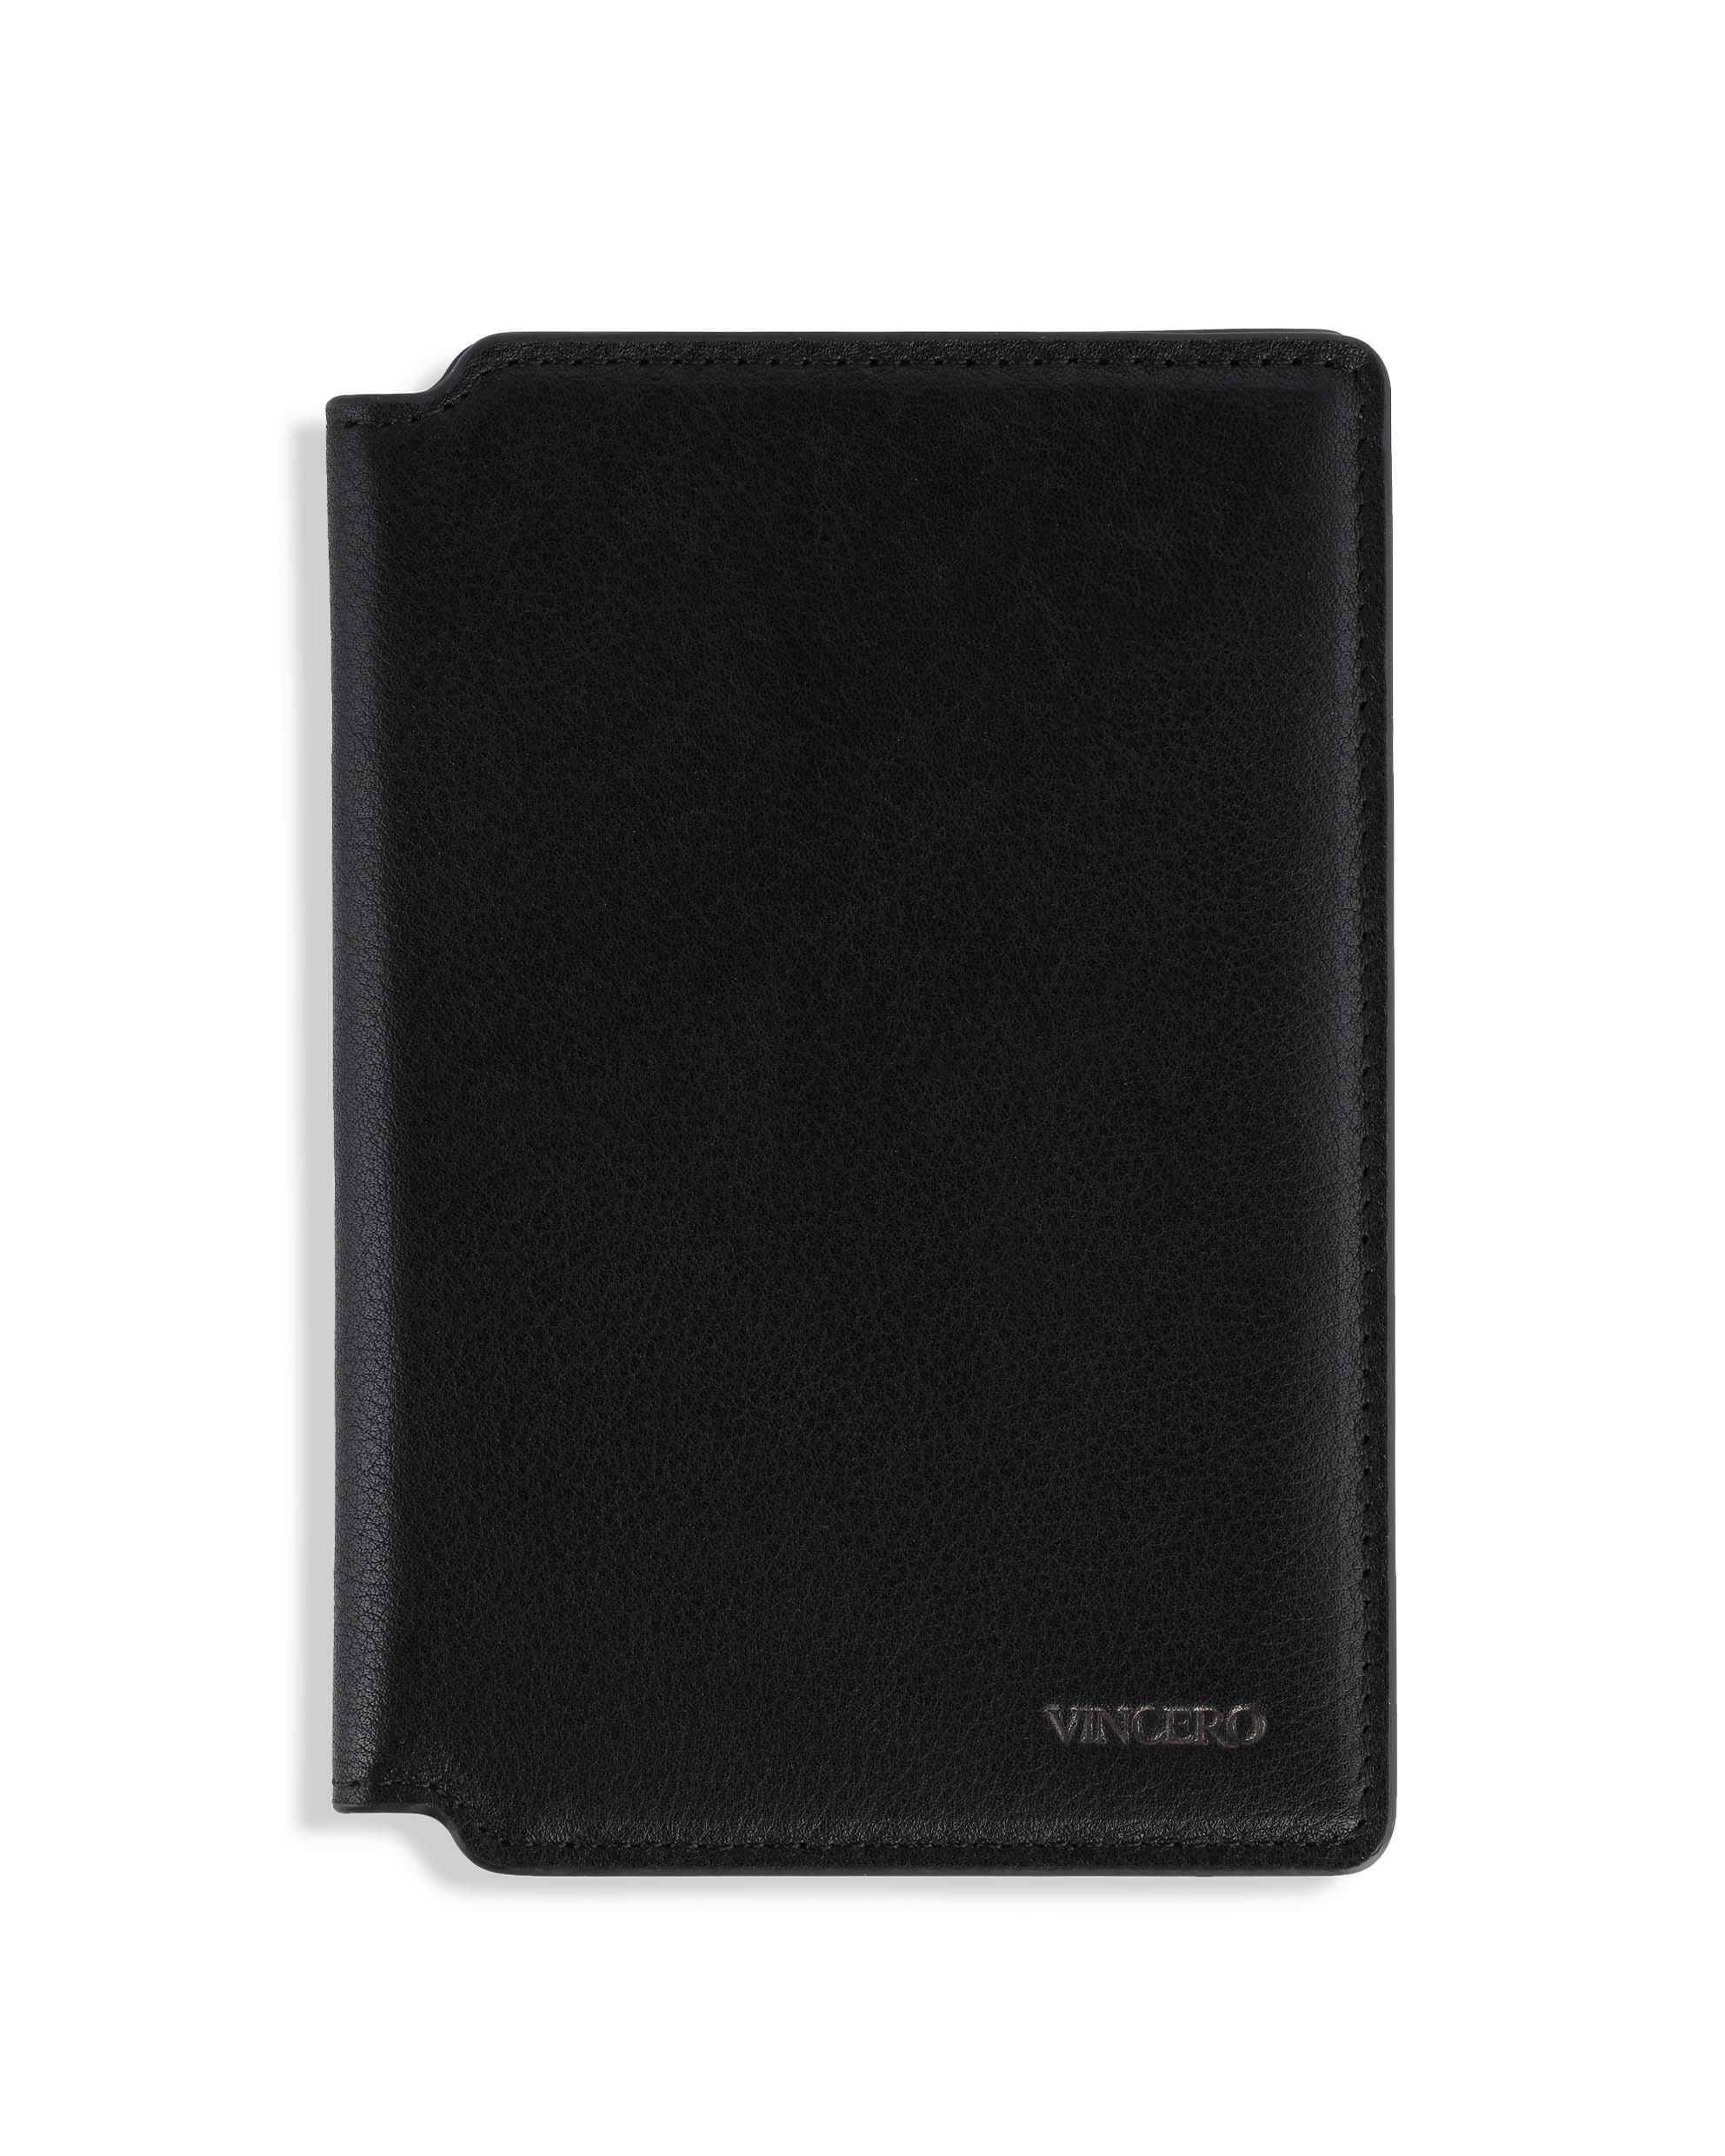 The Passport Wallet - Black, Vincero Watches